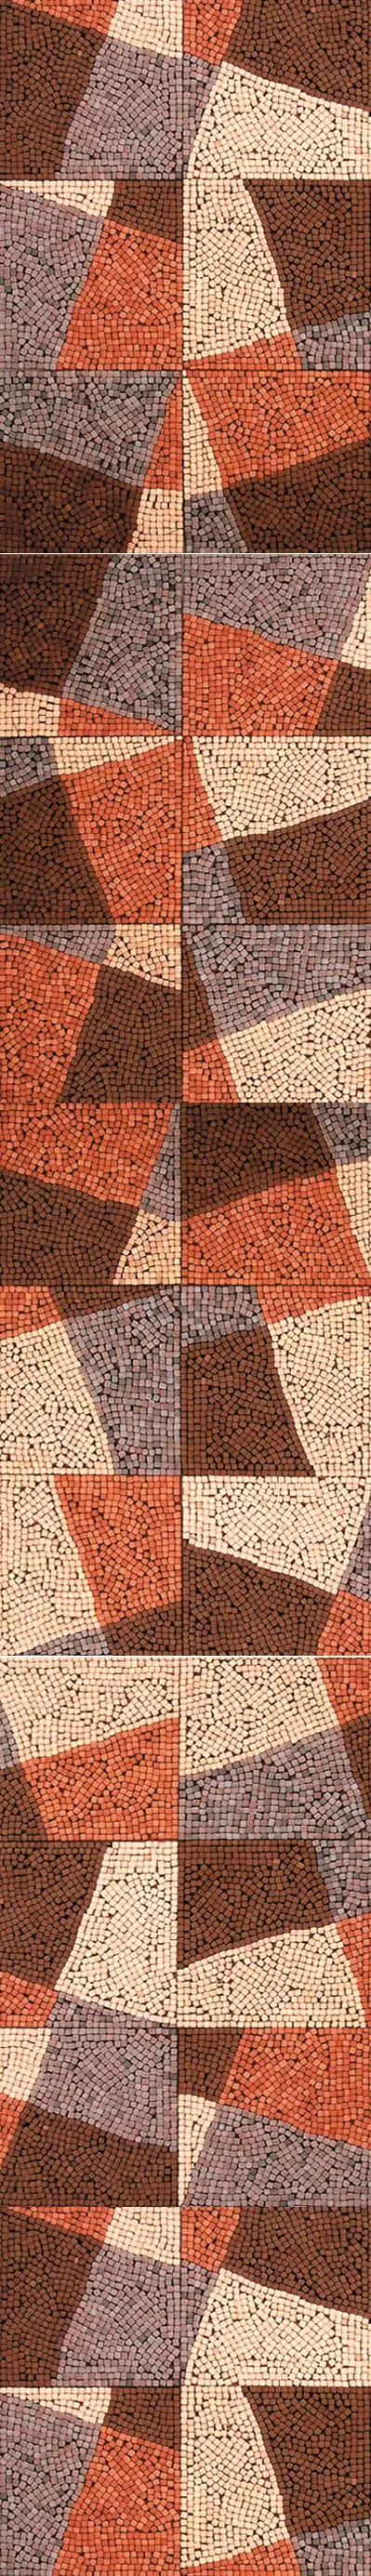 Parquet mosaic texture 0182023